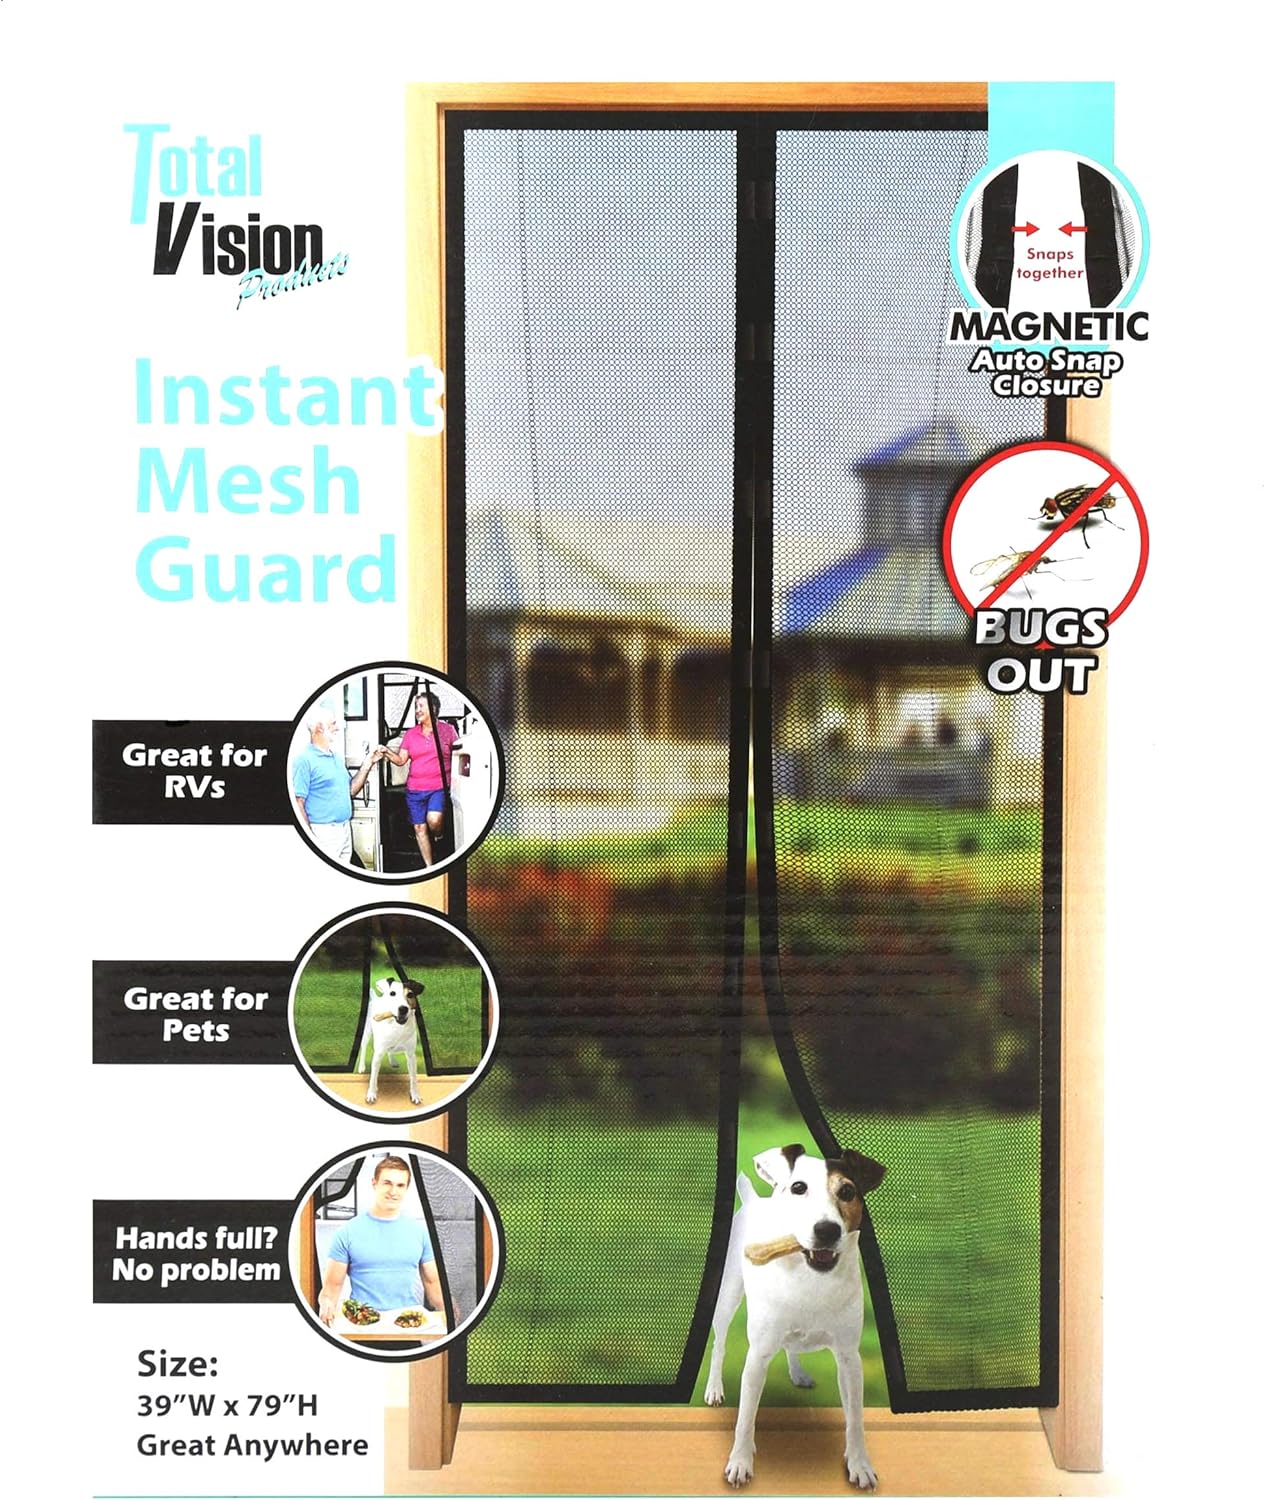 Total Vision Door Instant Mesh Guard